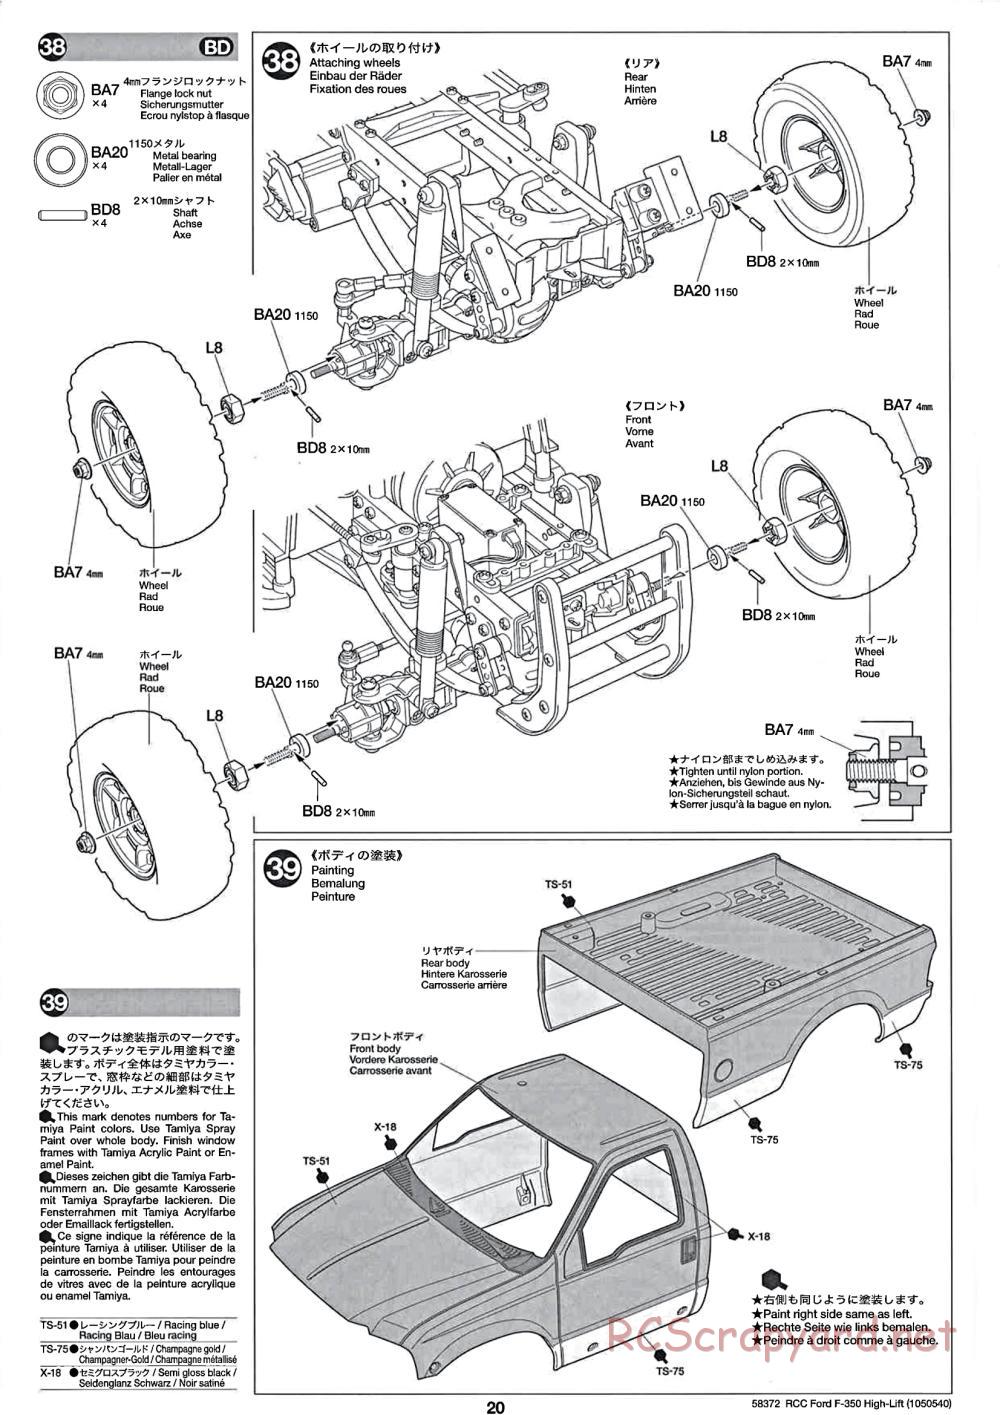 Tamiya - Ford F350 High-Lift Chassis - Manual - Page 20